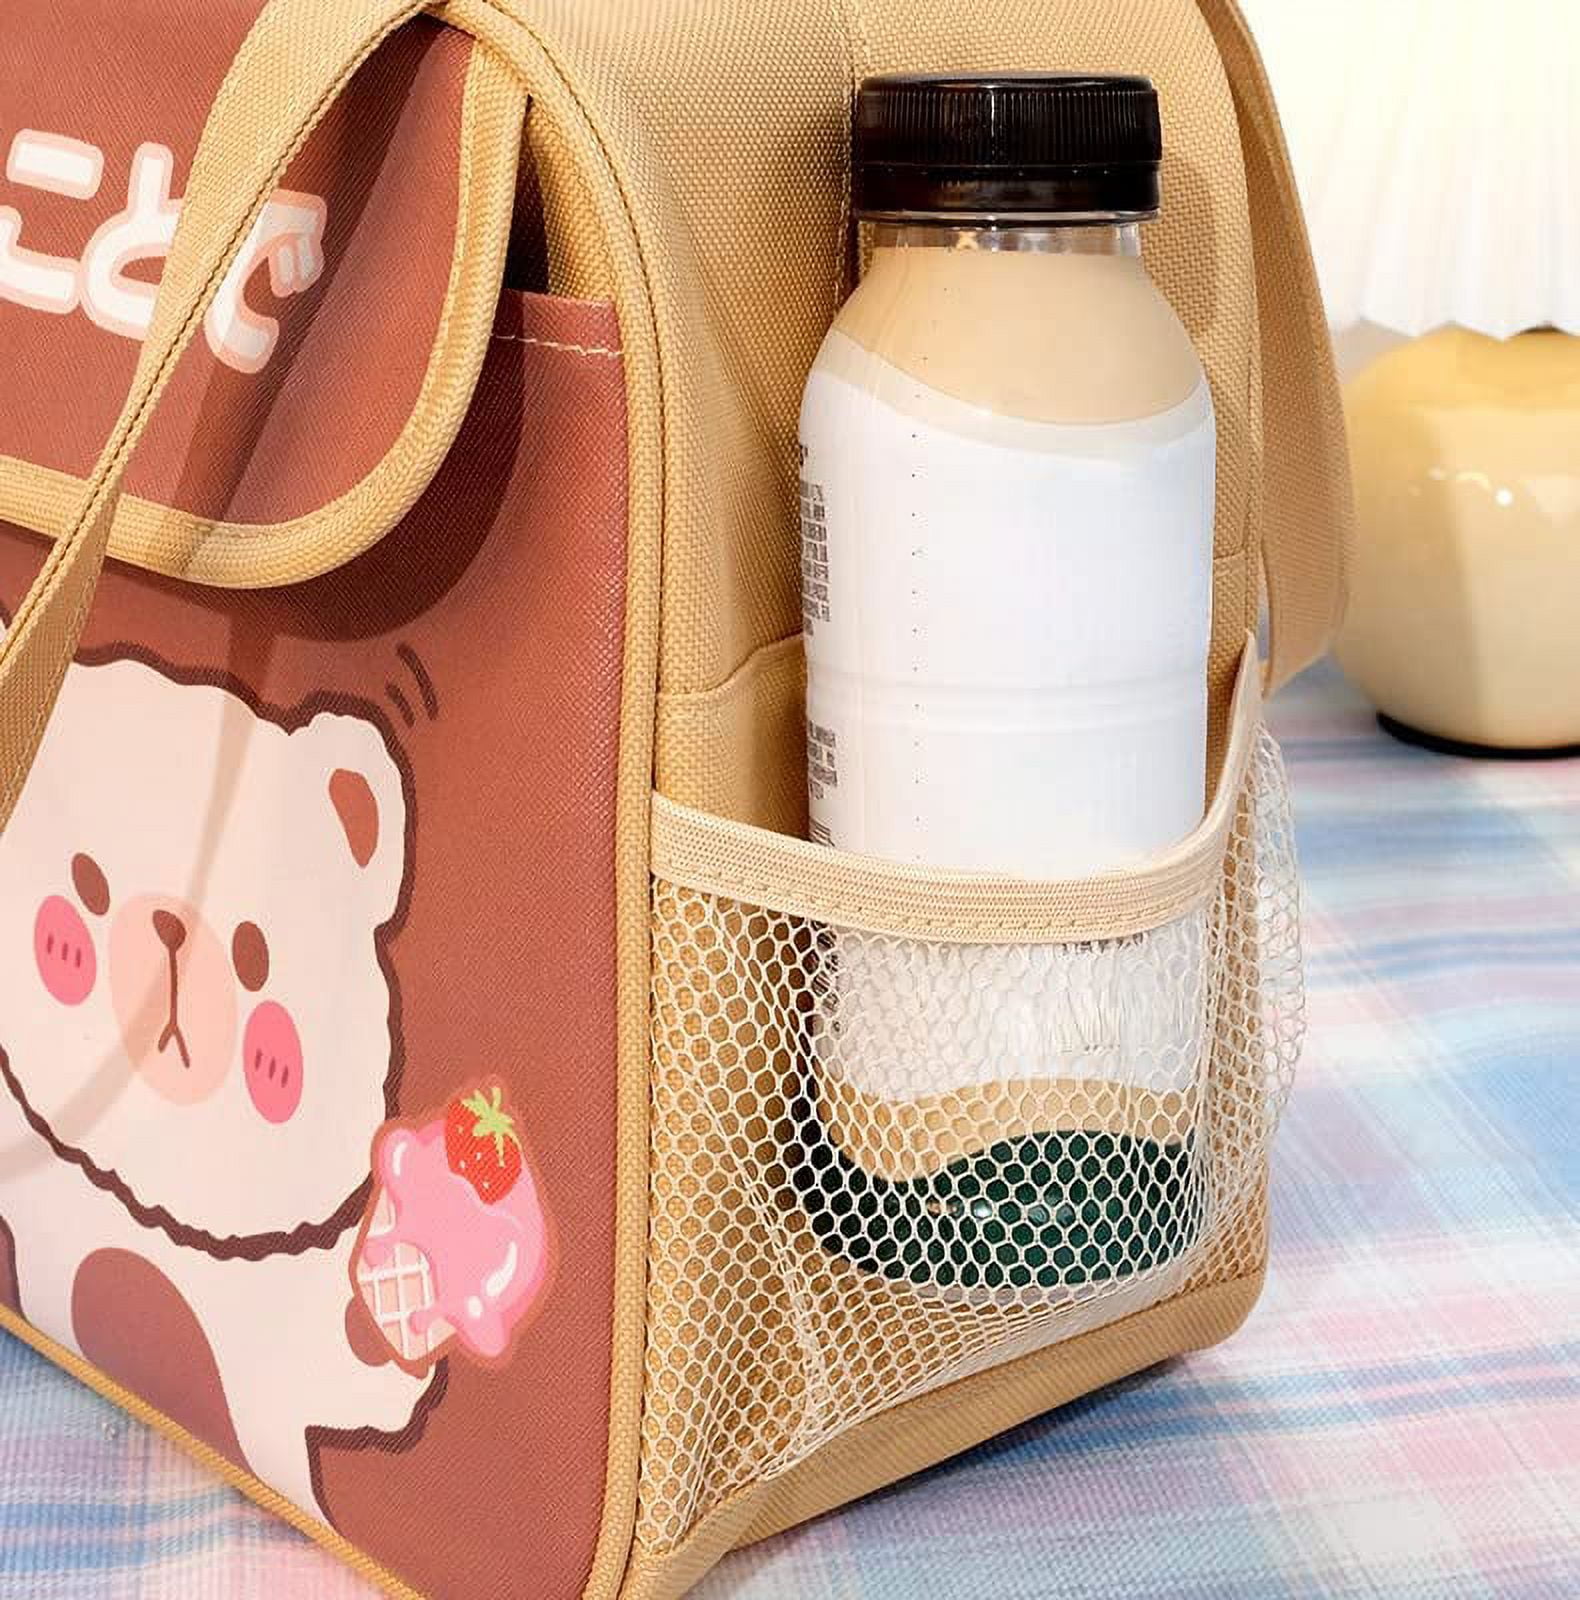 DanceeMangoo Kawaii Lunch Tote Bag Cute Embroidery Bear Insulated